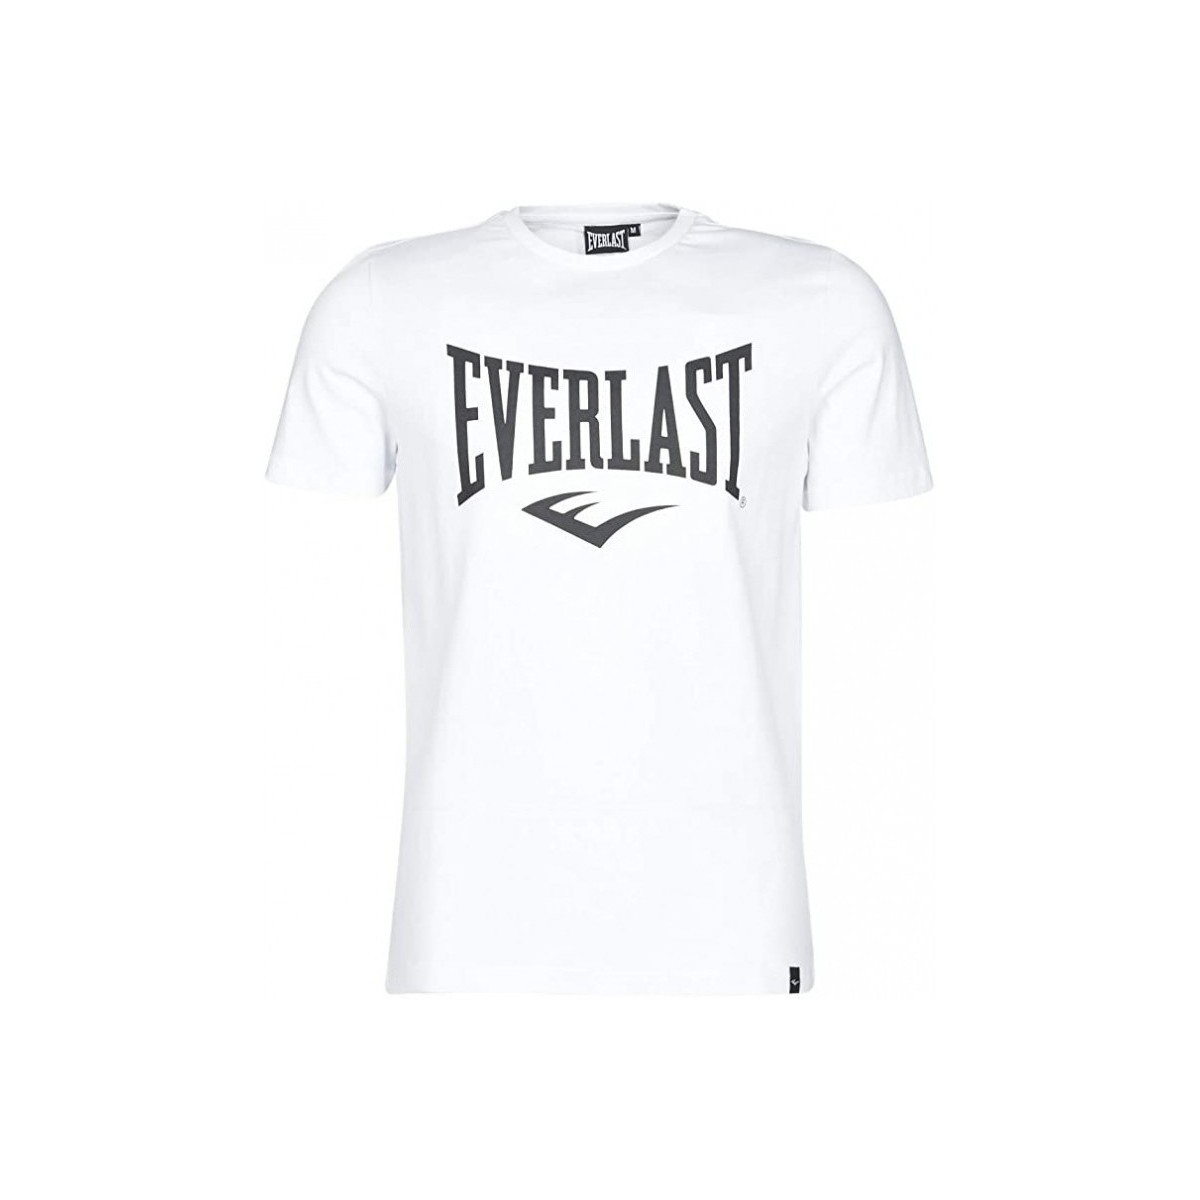 Vêtements Homme Asics Silver Women's T-Shirt Tee Shirt 807580-60 Blanc Blanc